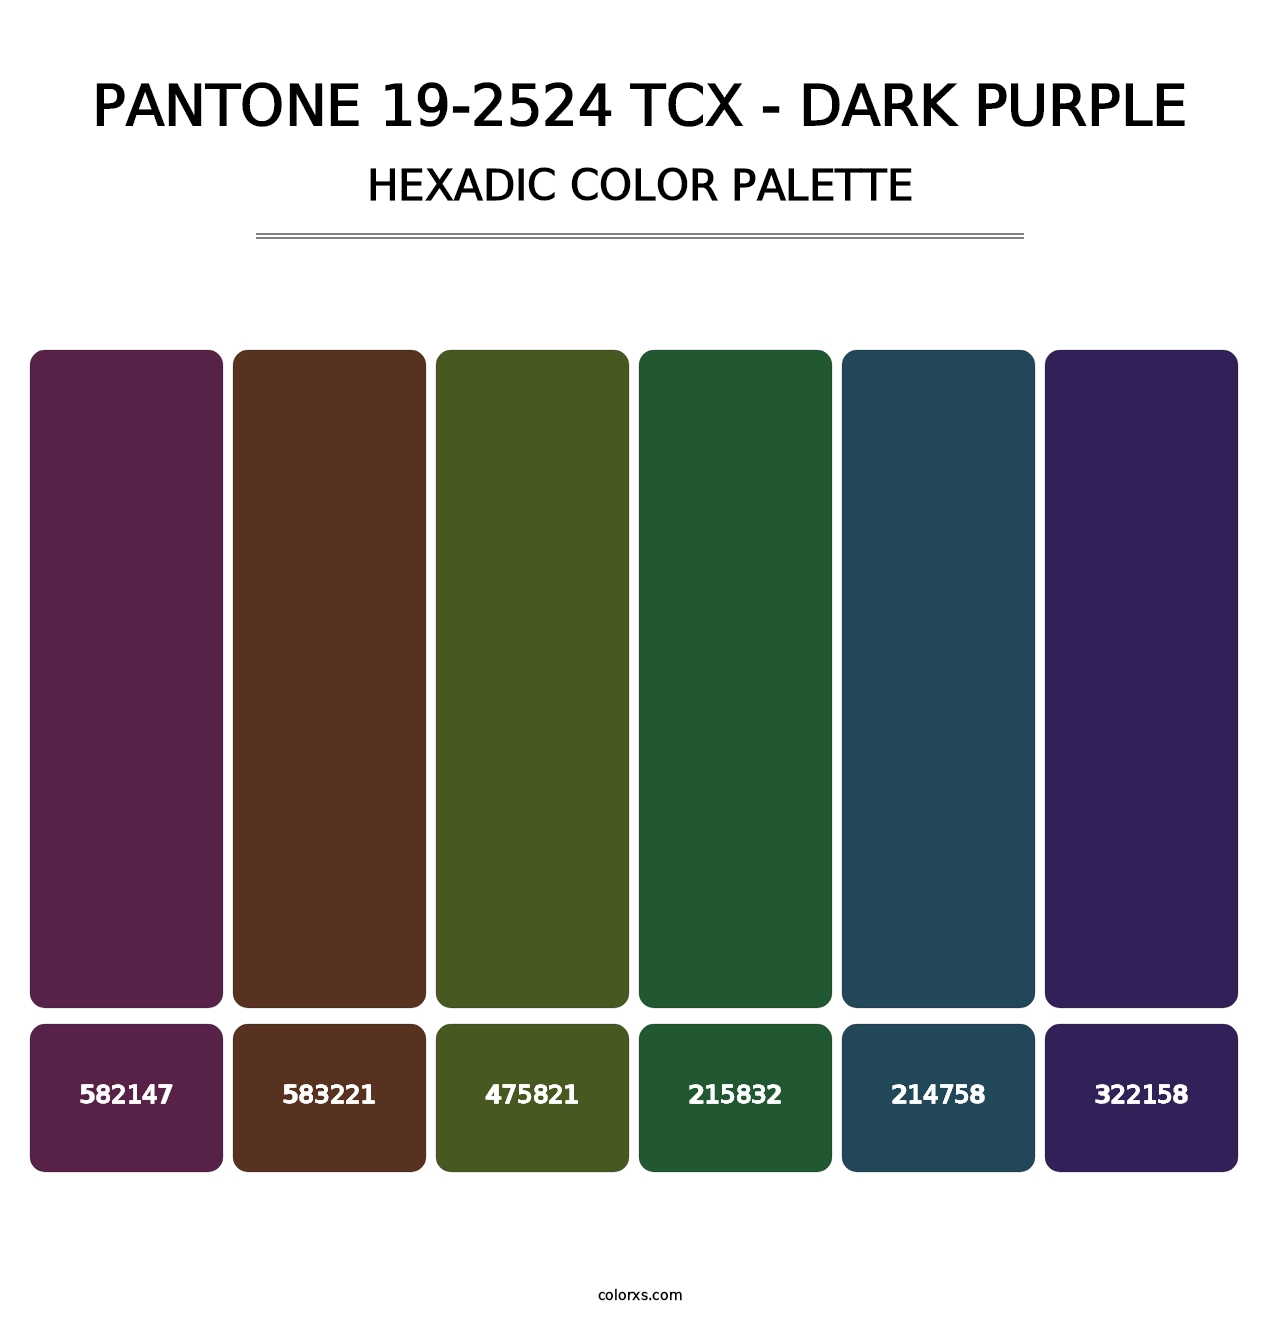 PANTONE 19-2524 TCX - Dark Purple - Hexadic Color Palette